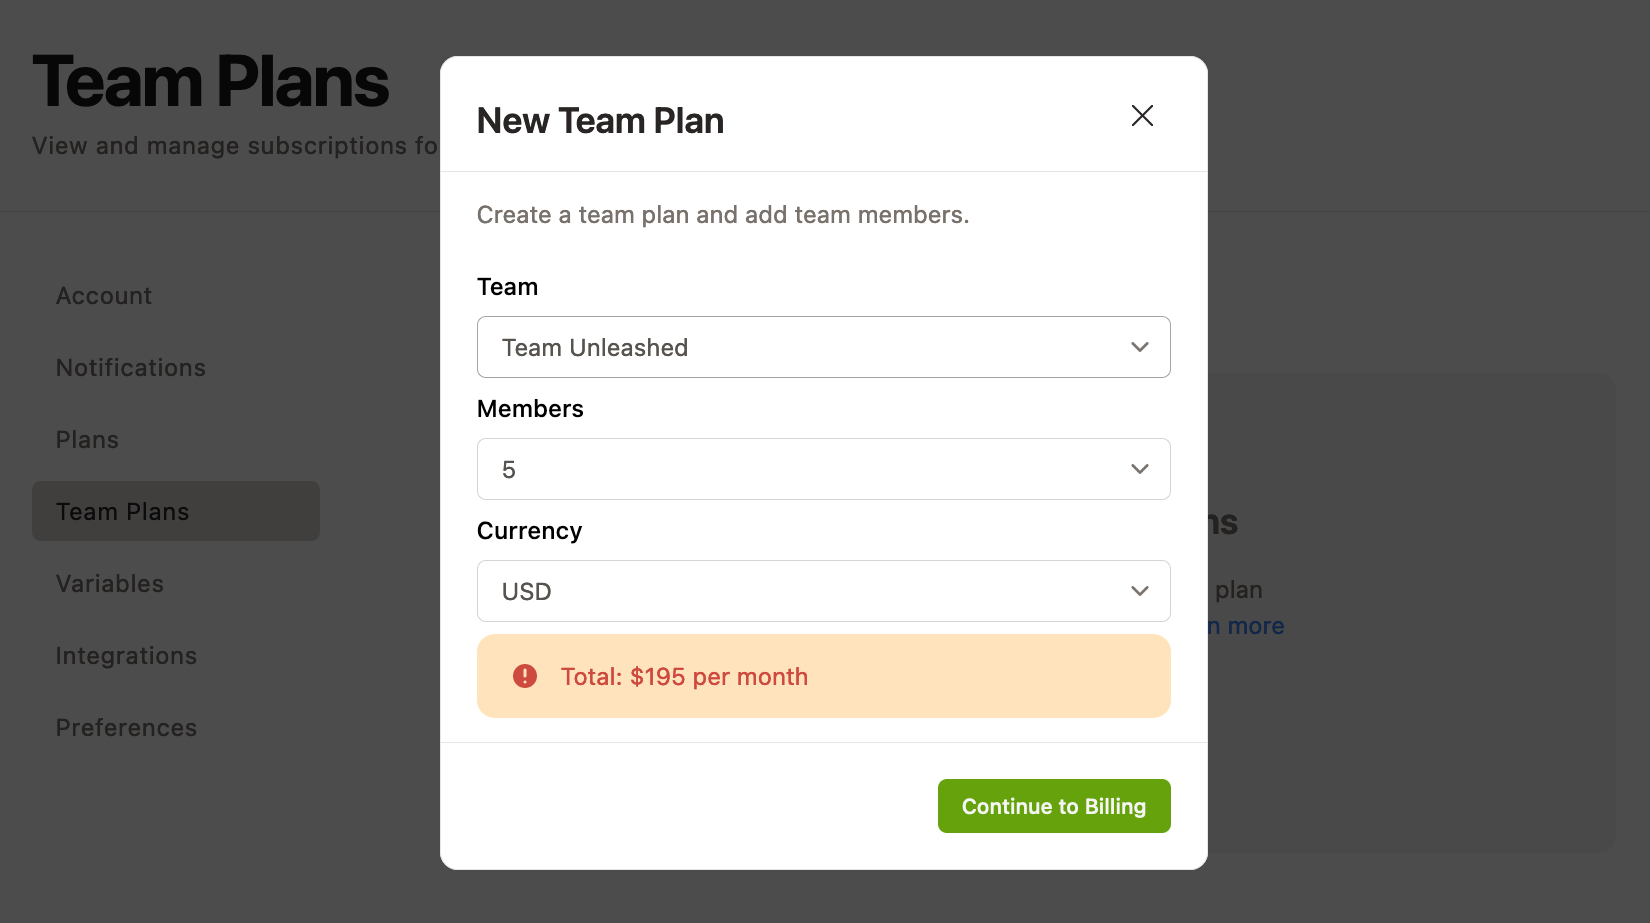 New Team Plan